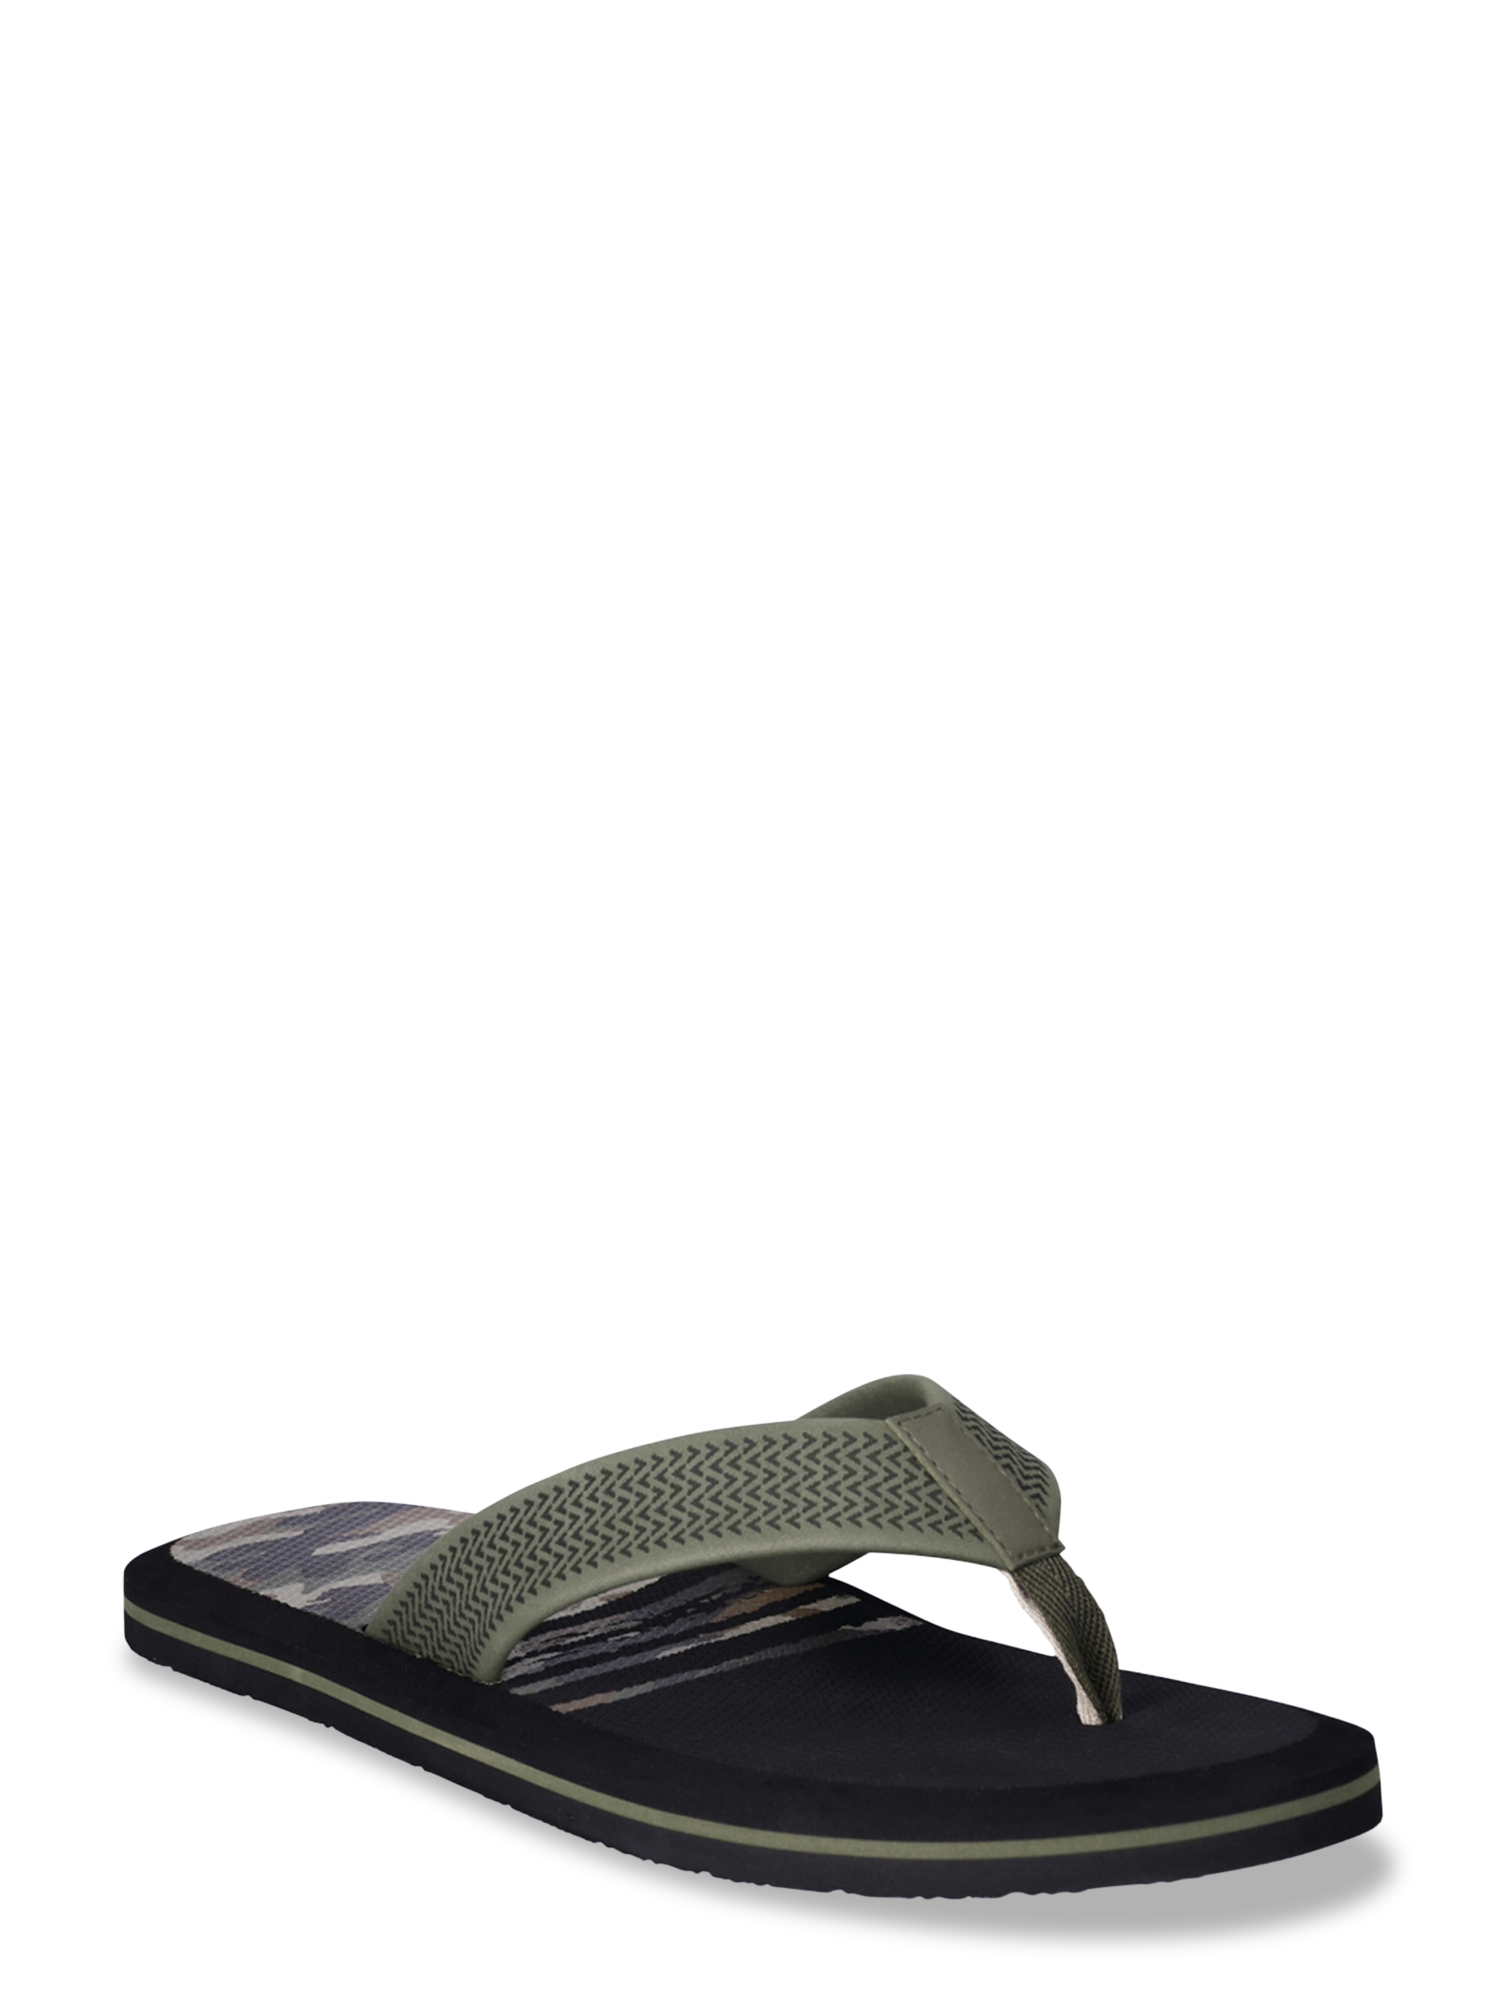 George Men's Ocean Flip Sandals - image 1 of 8